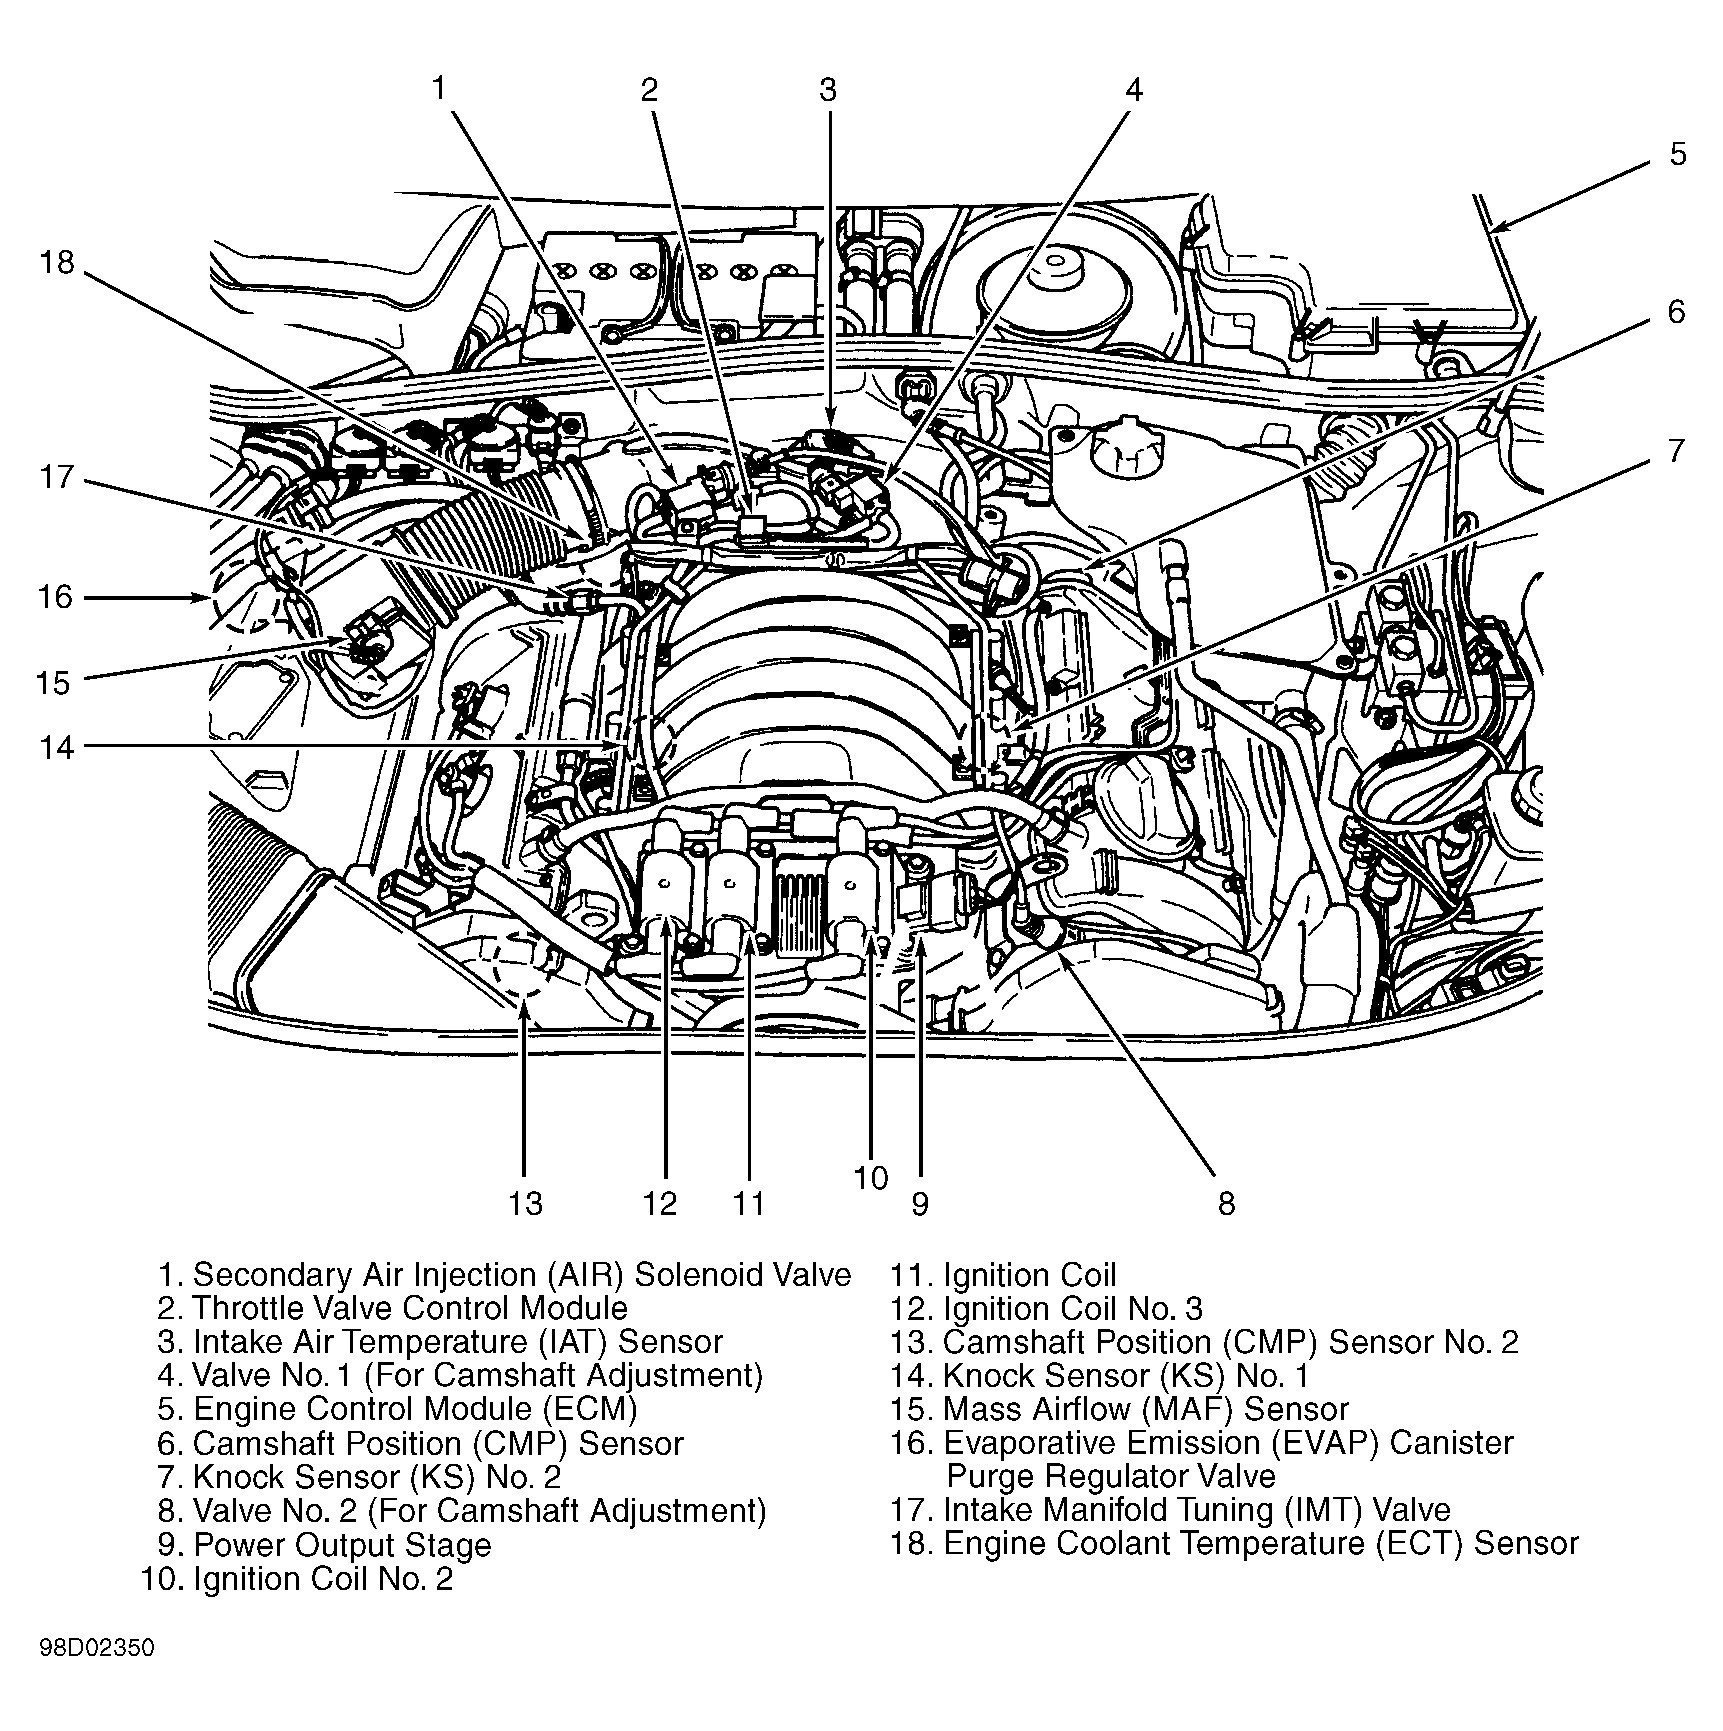 Dodge Truck Parts Diagram 1999 Dodge Durango 5 9 Engine Diagram Wiring Diagram Datasource Of Dodge Truck Parts Diagram